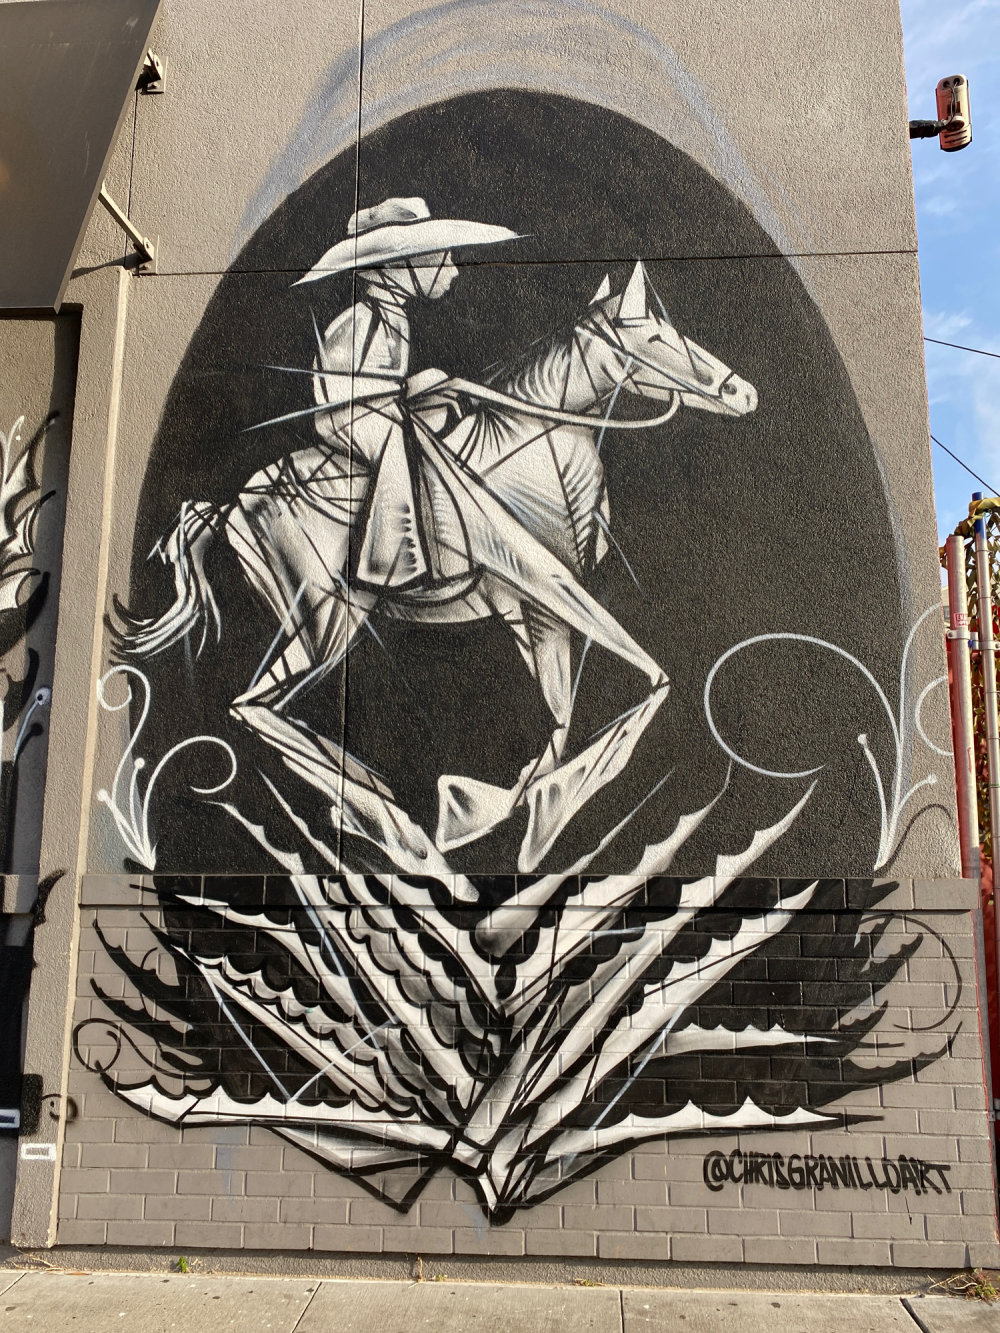 mural in San Francisco by artist Chris Granillo.